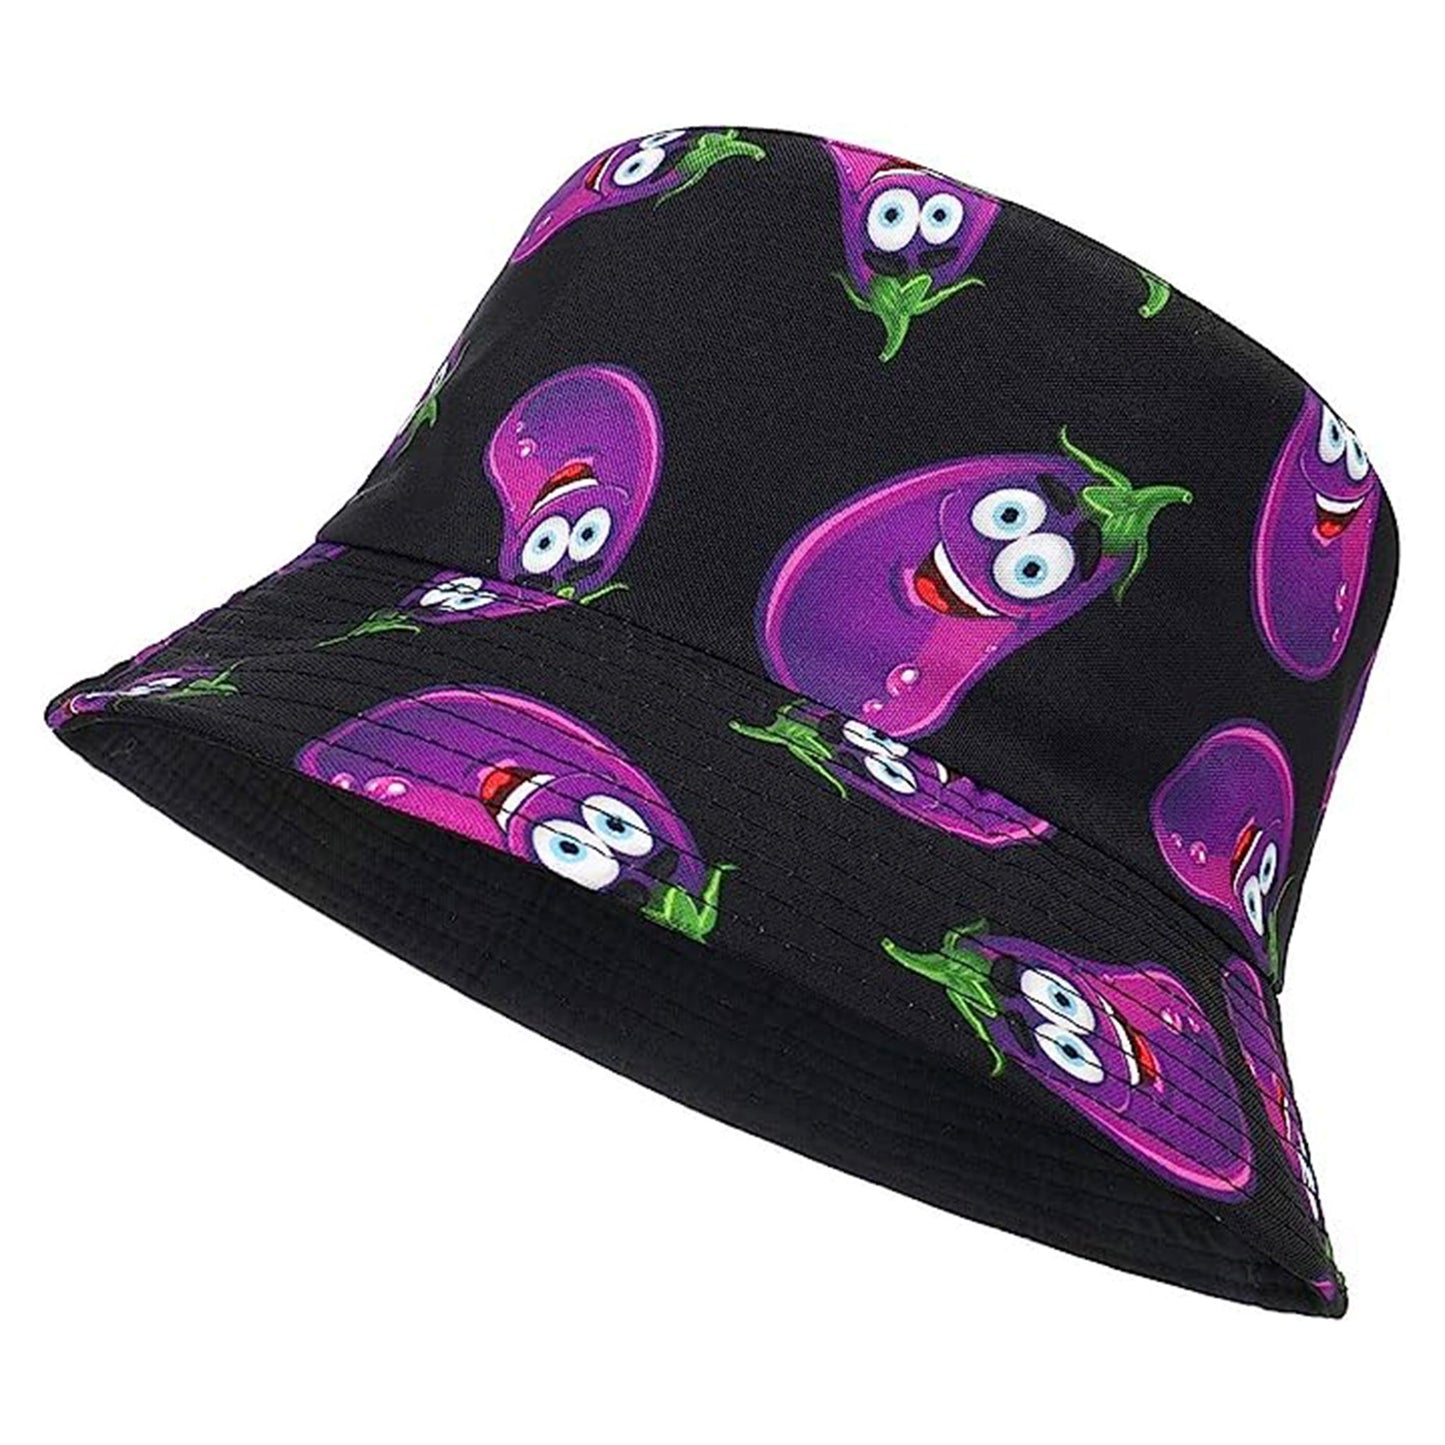 Bucket hat 100% cotton with reversible design, aubergine black festival hat